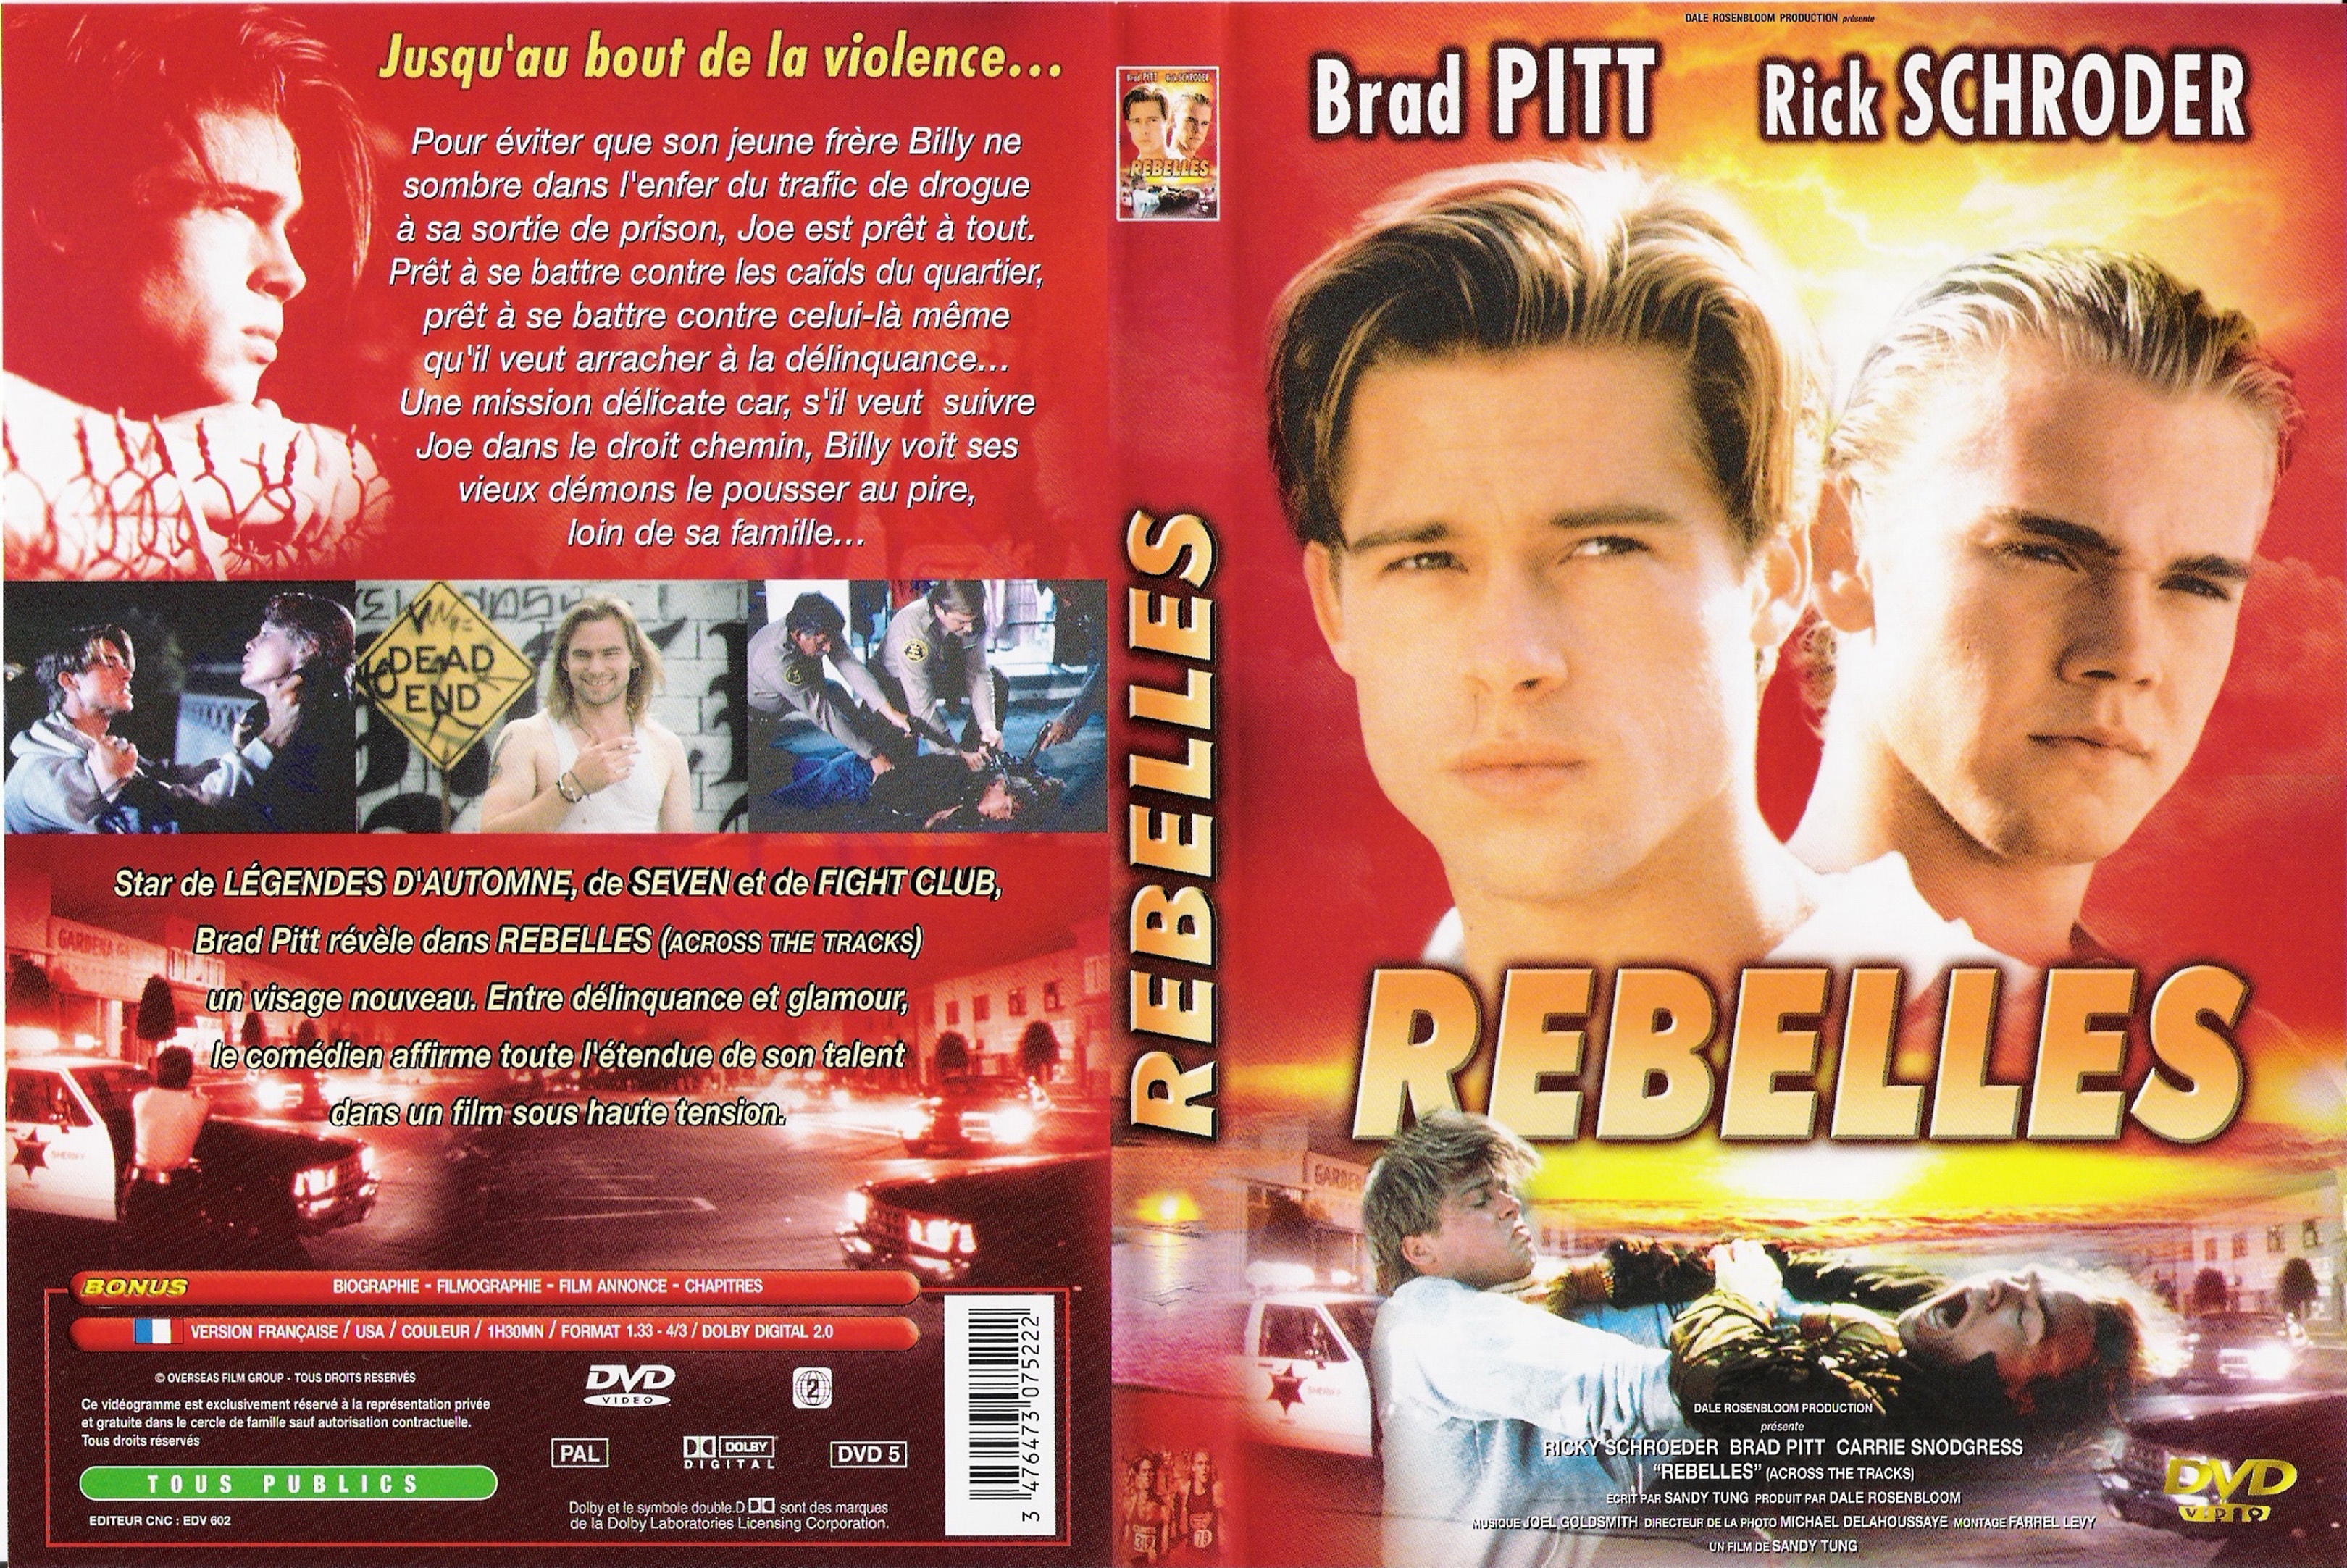 Jaquette DVD Rebelles